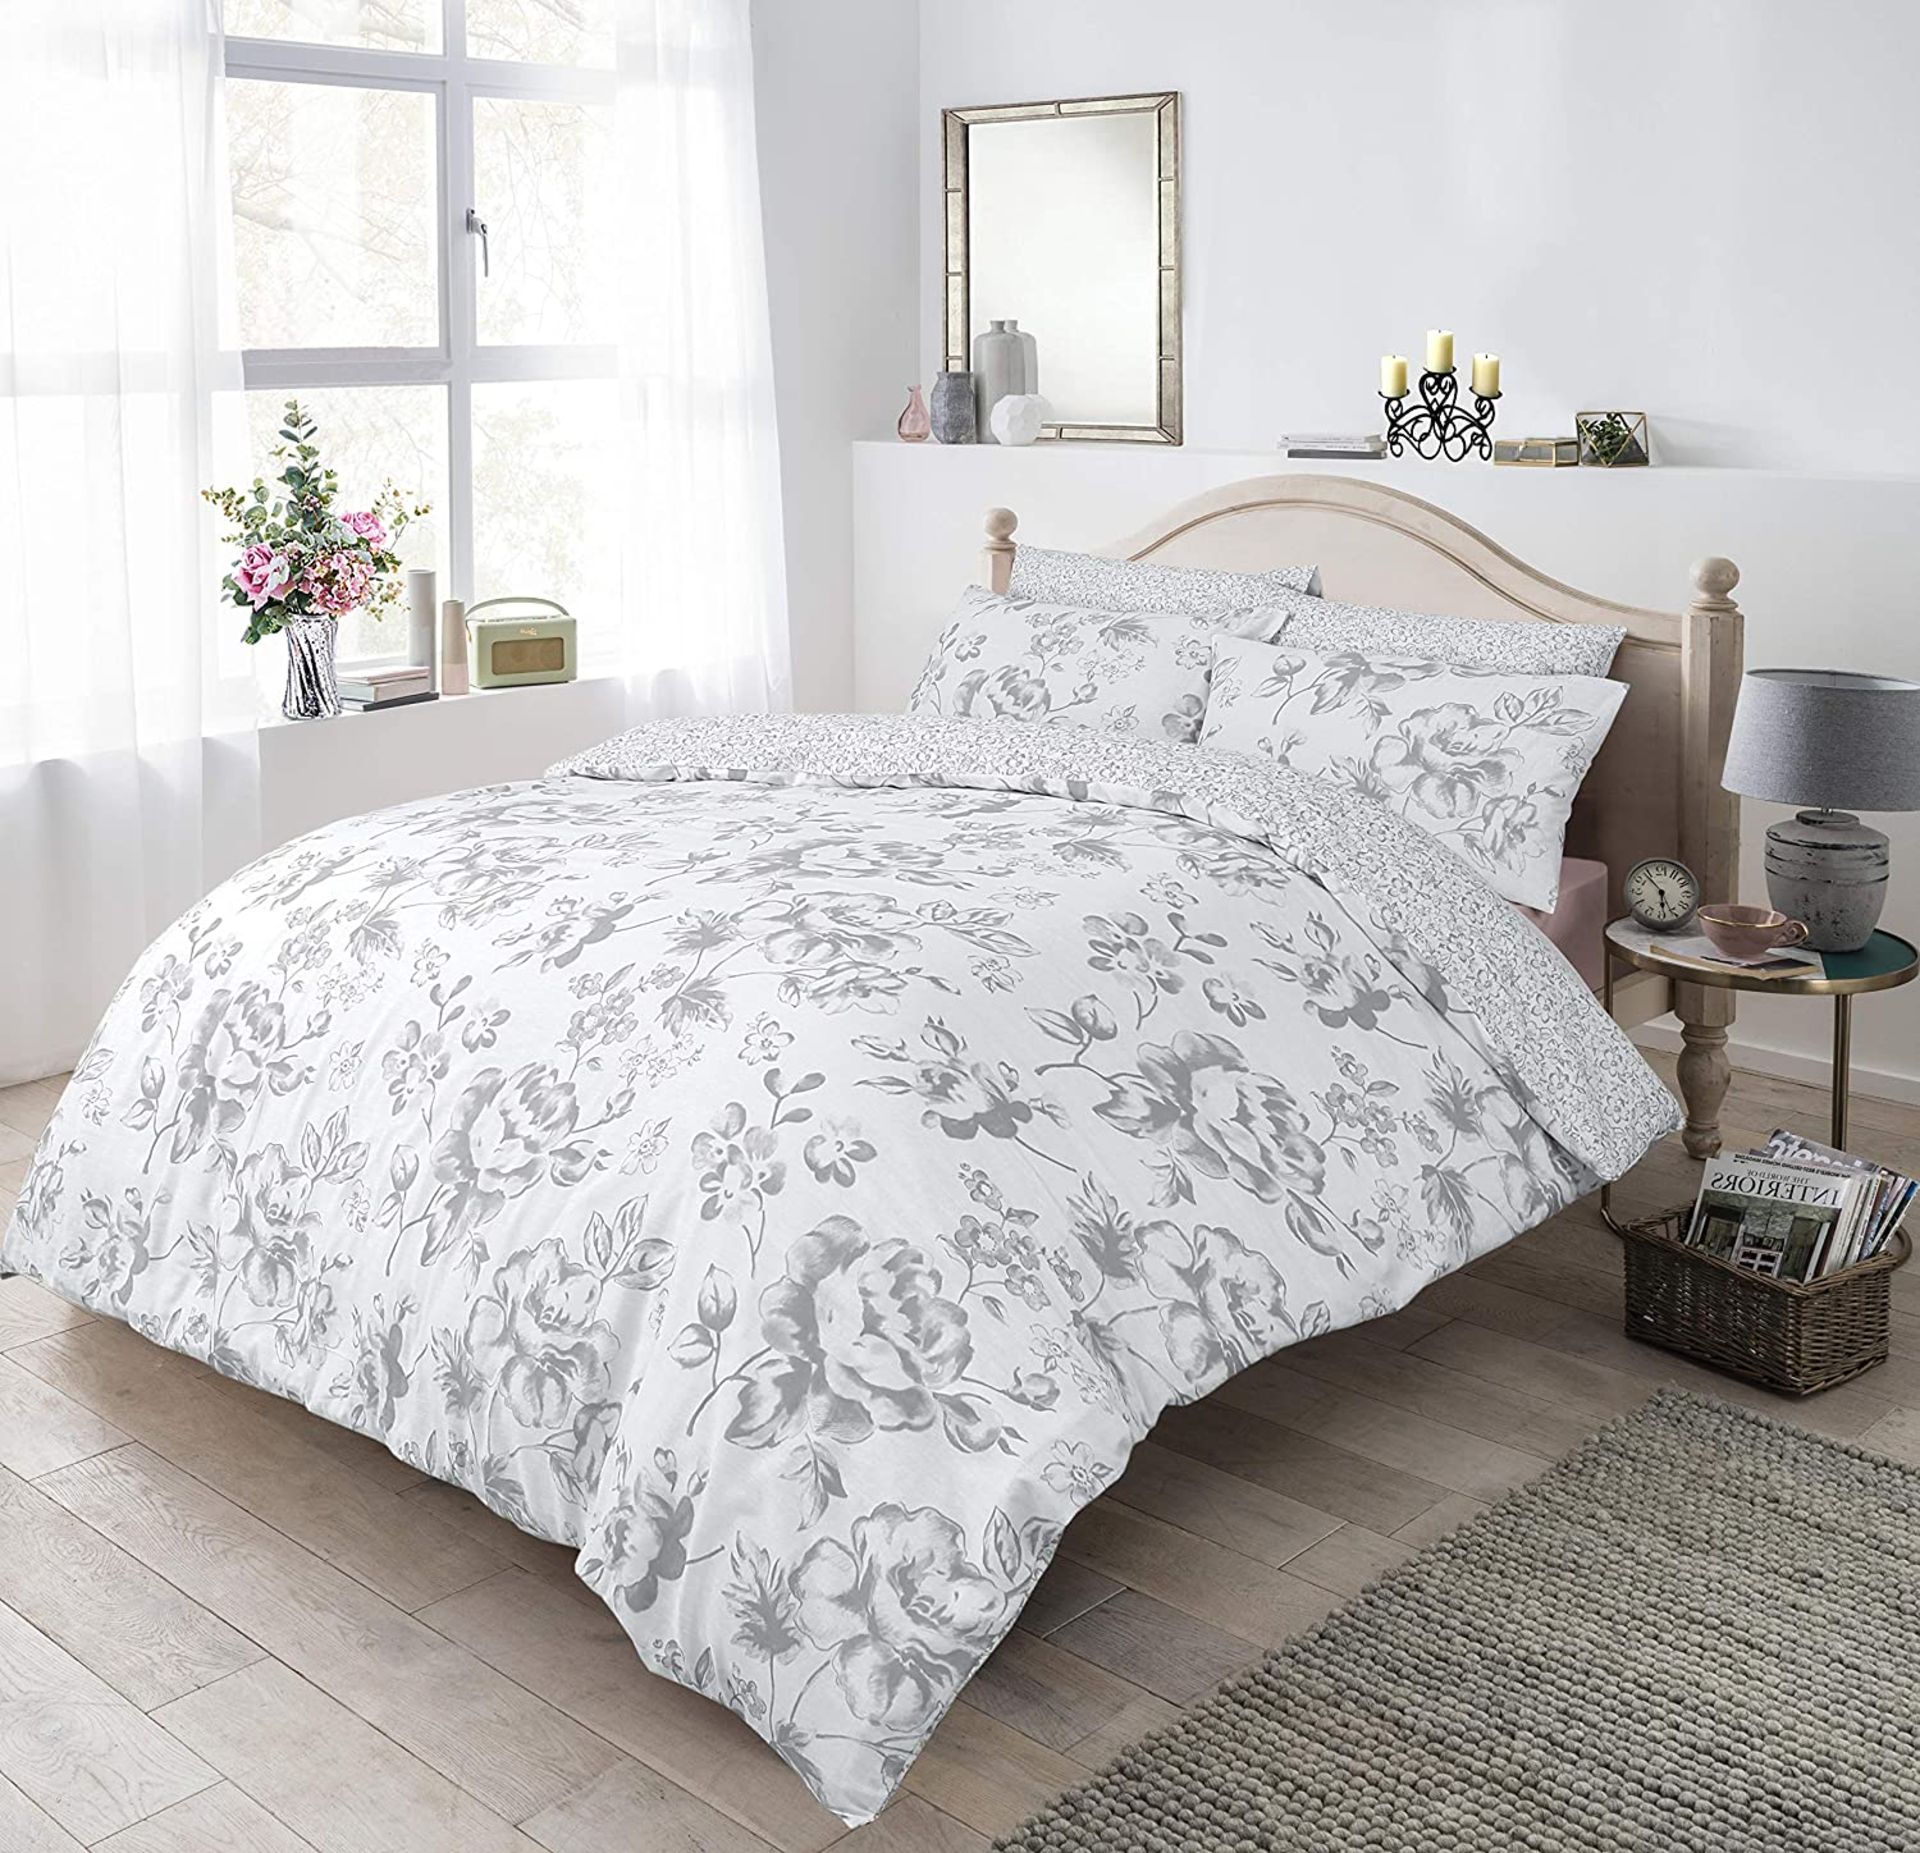 Sleepdown Floral Monochrome Grey Duvet Set - King Size Bedding Quilt Cover & Pillowcases Good Nights